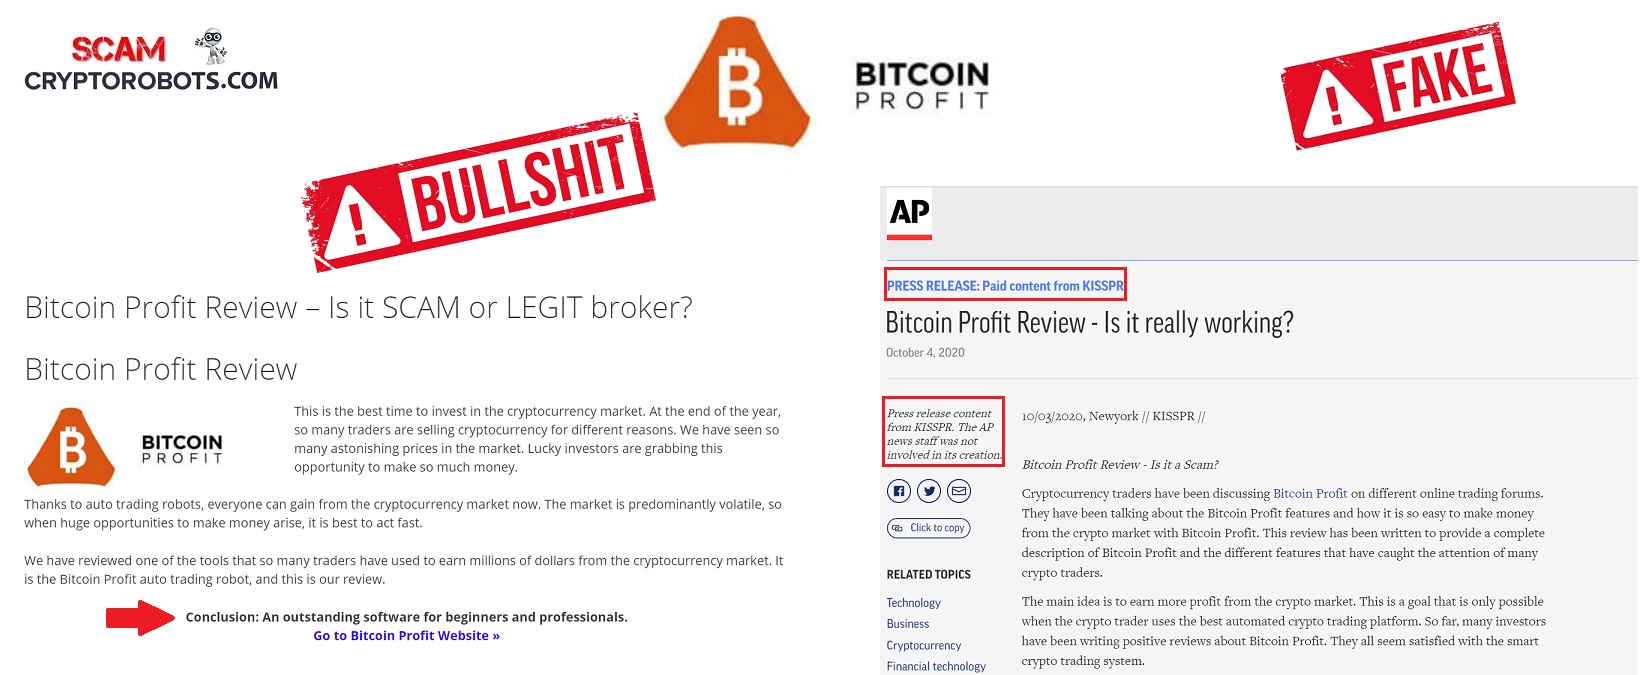 bitcoin profit fake)